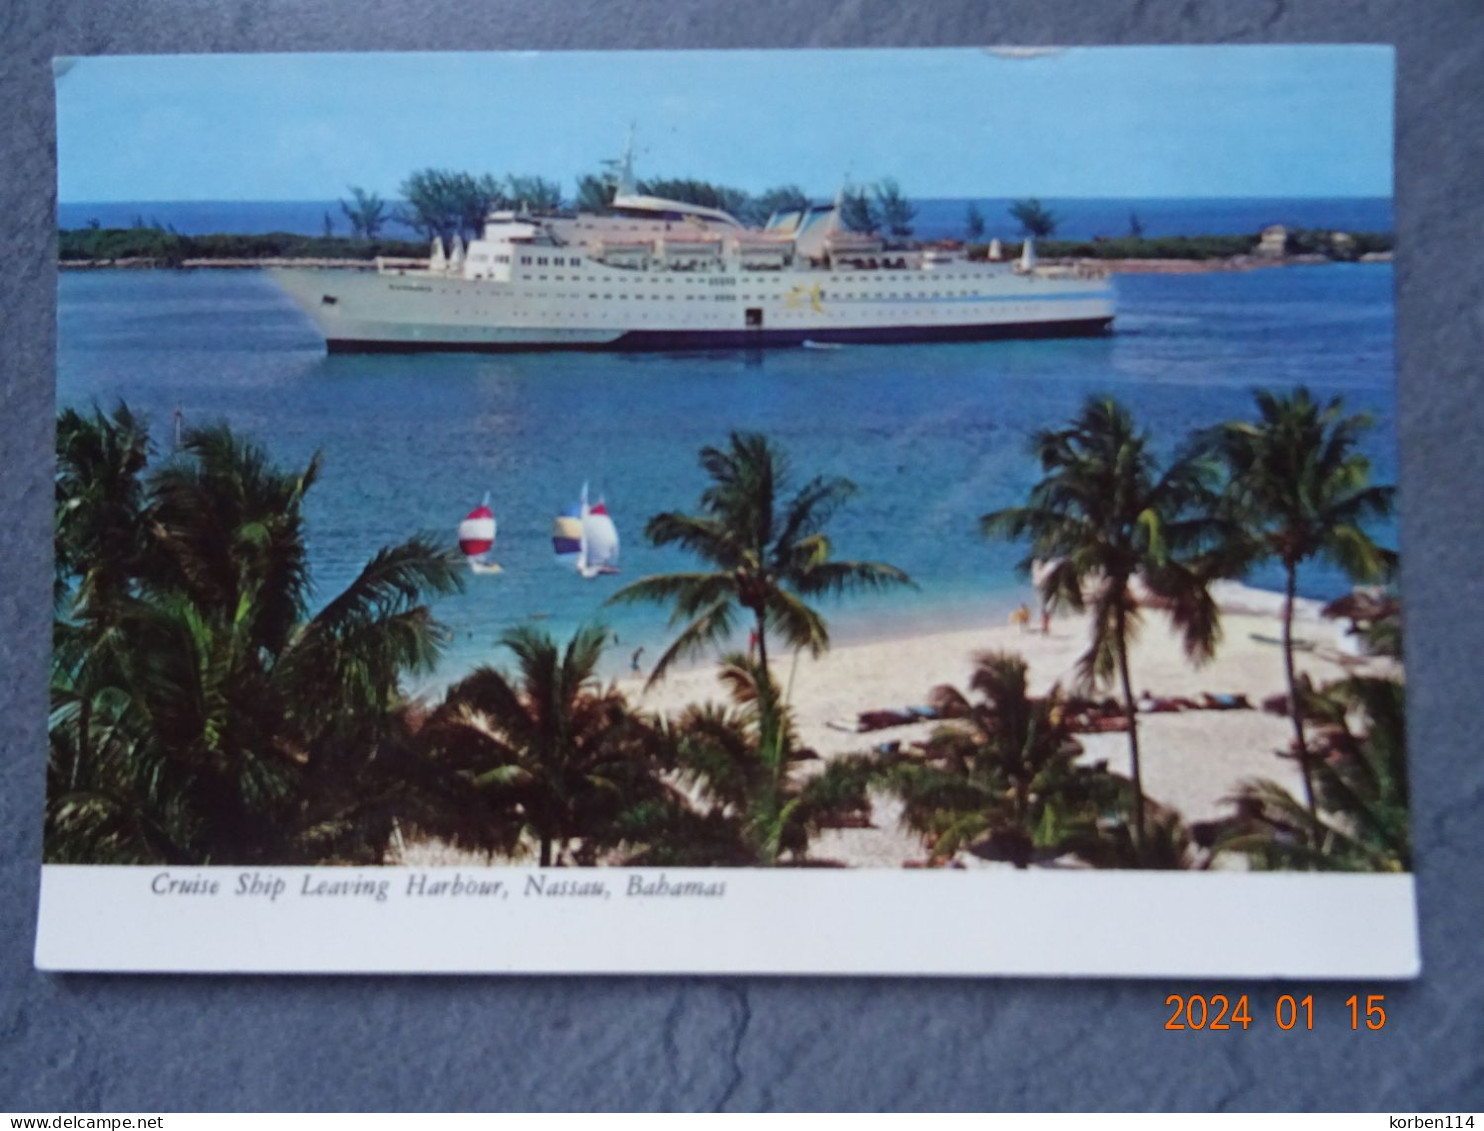 CRUISE SHIP LEAVING HARBOR NASSAU - Bahama's